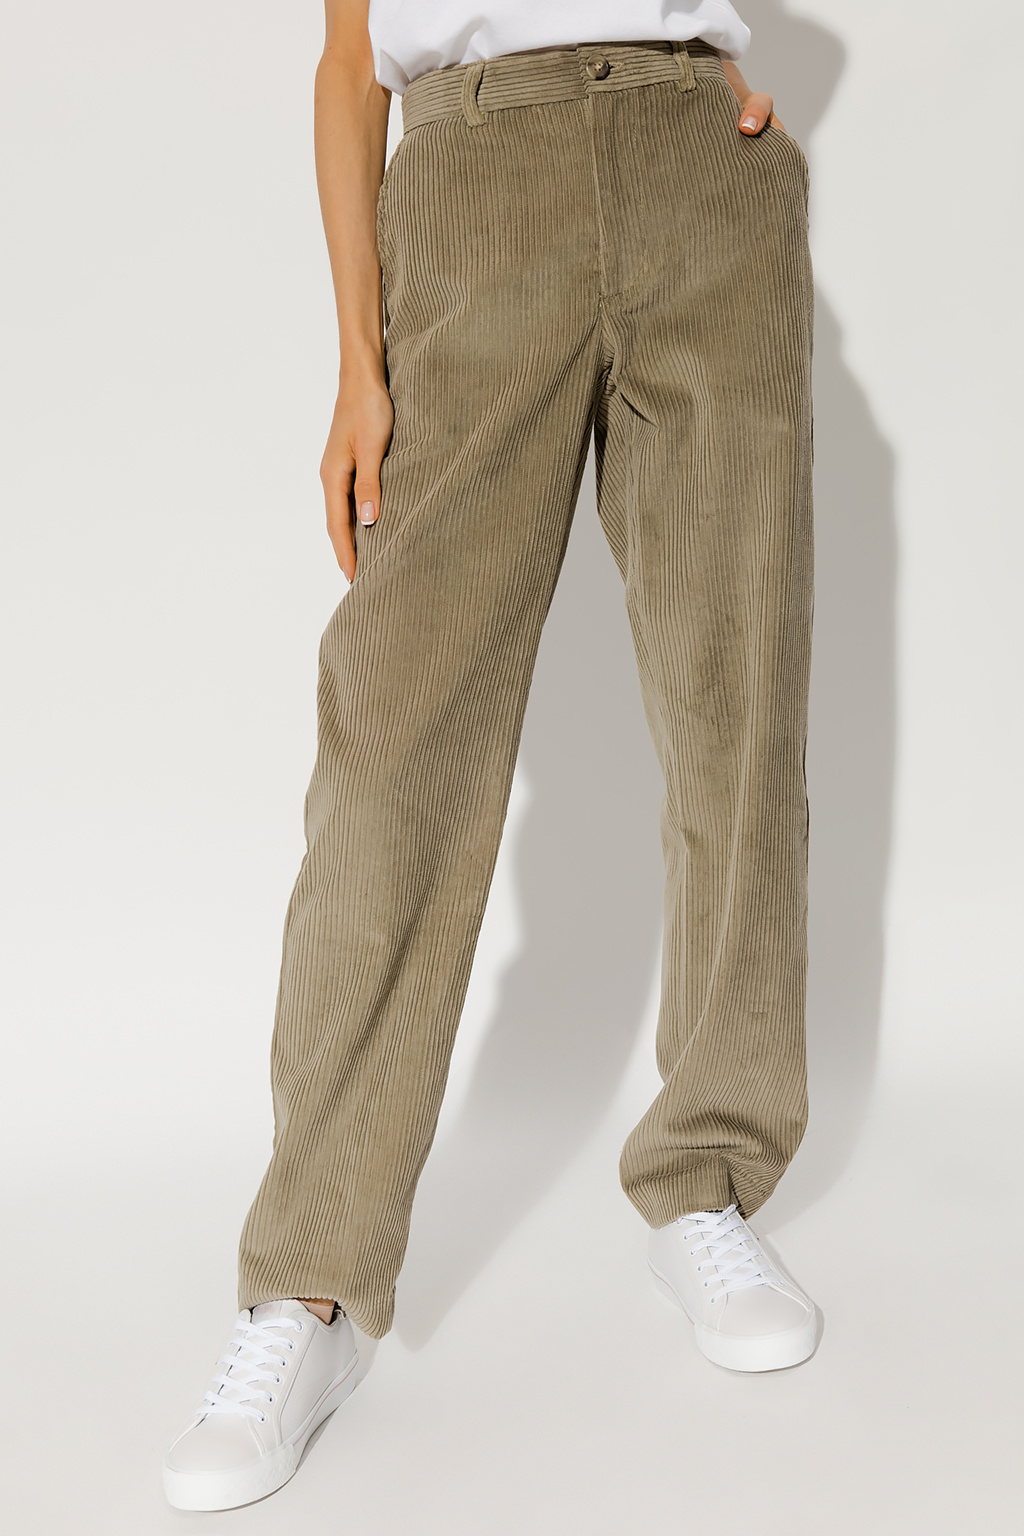 These A.P.C X Jane Birkin Pants — The Flair Index